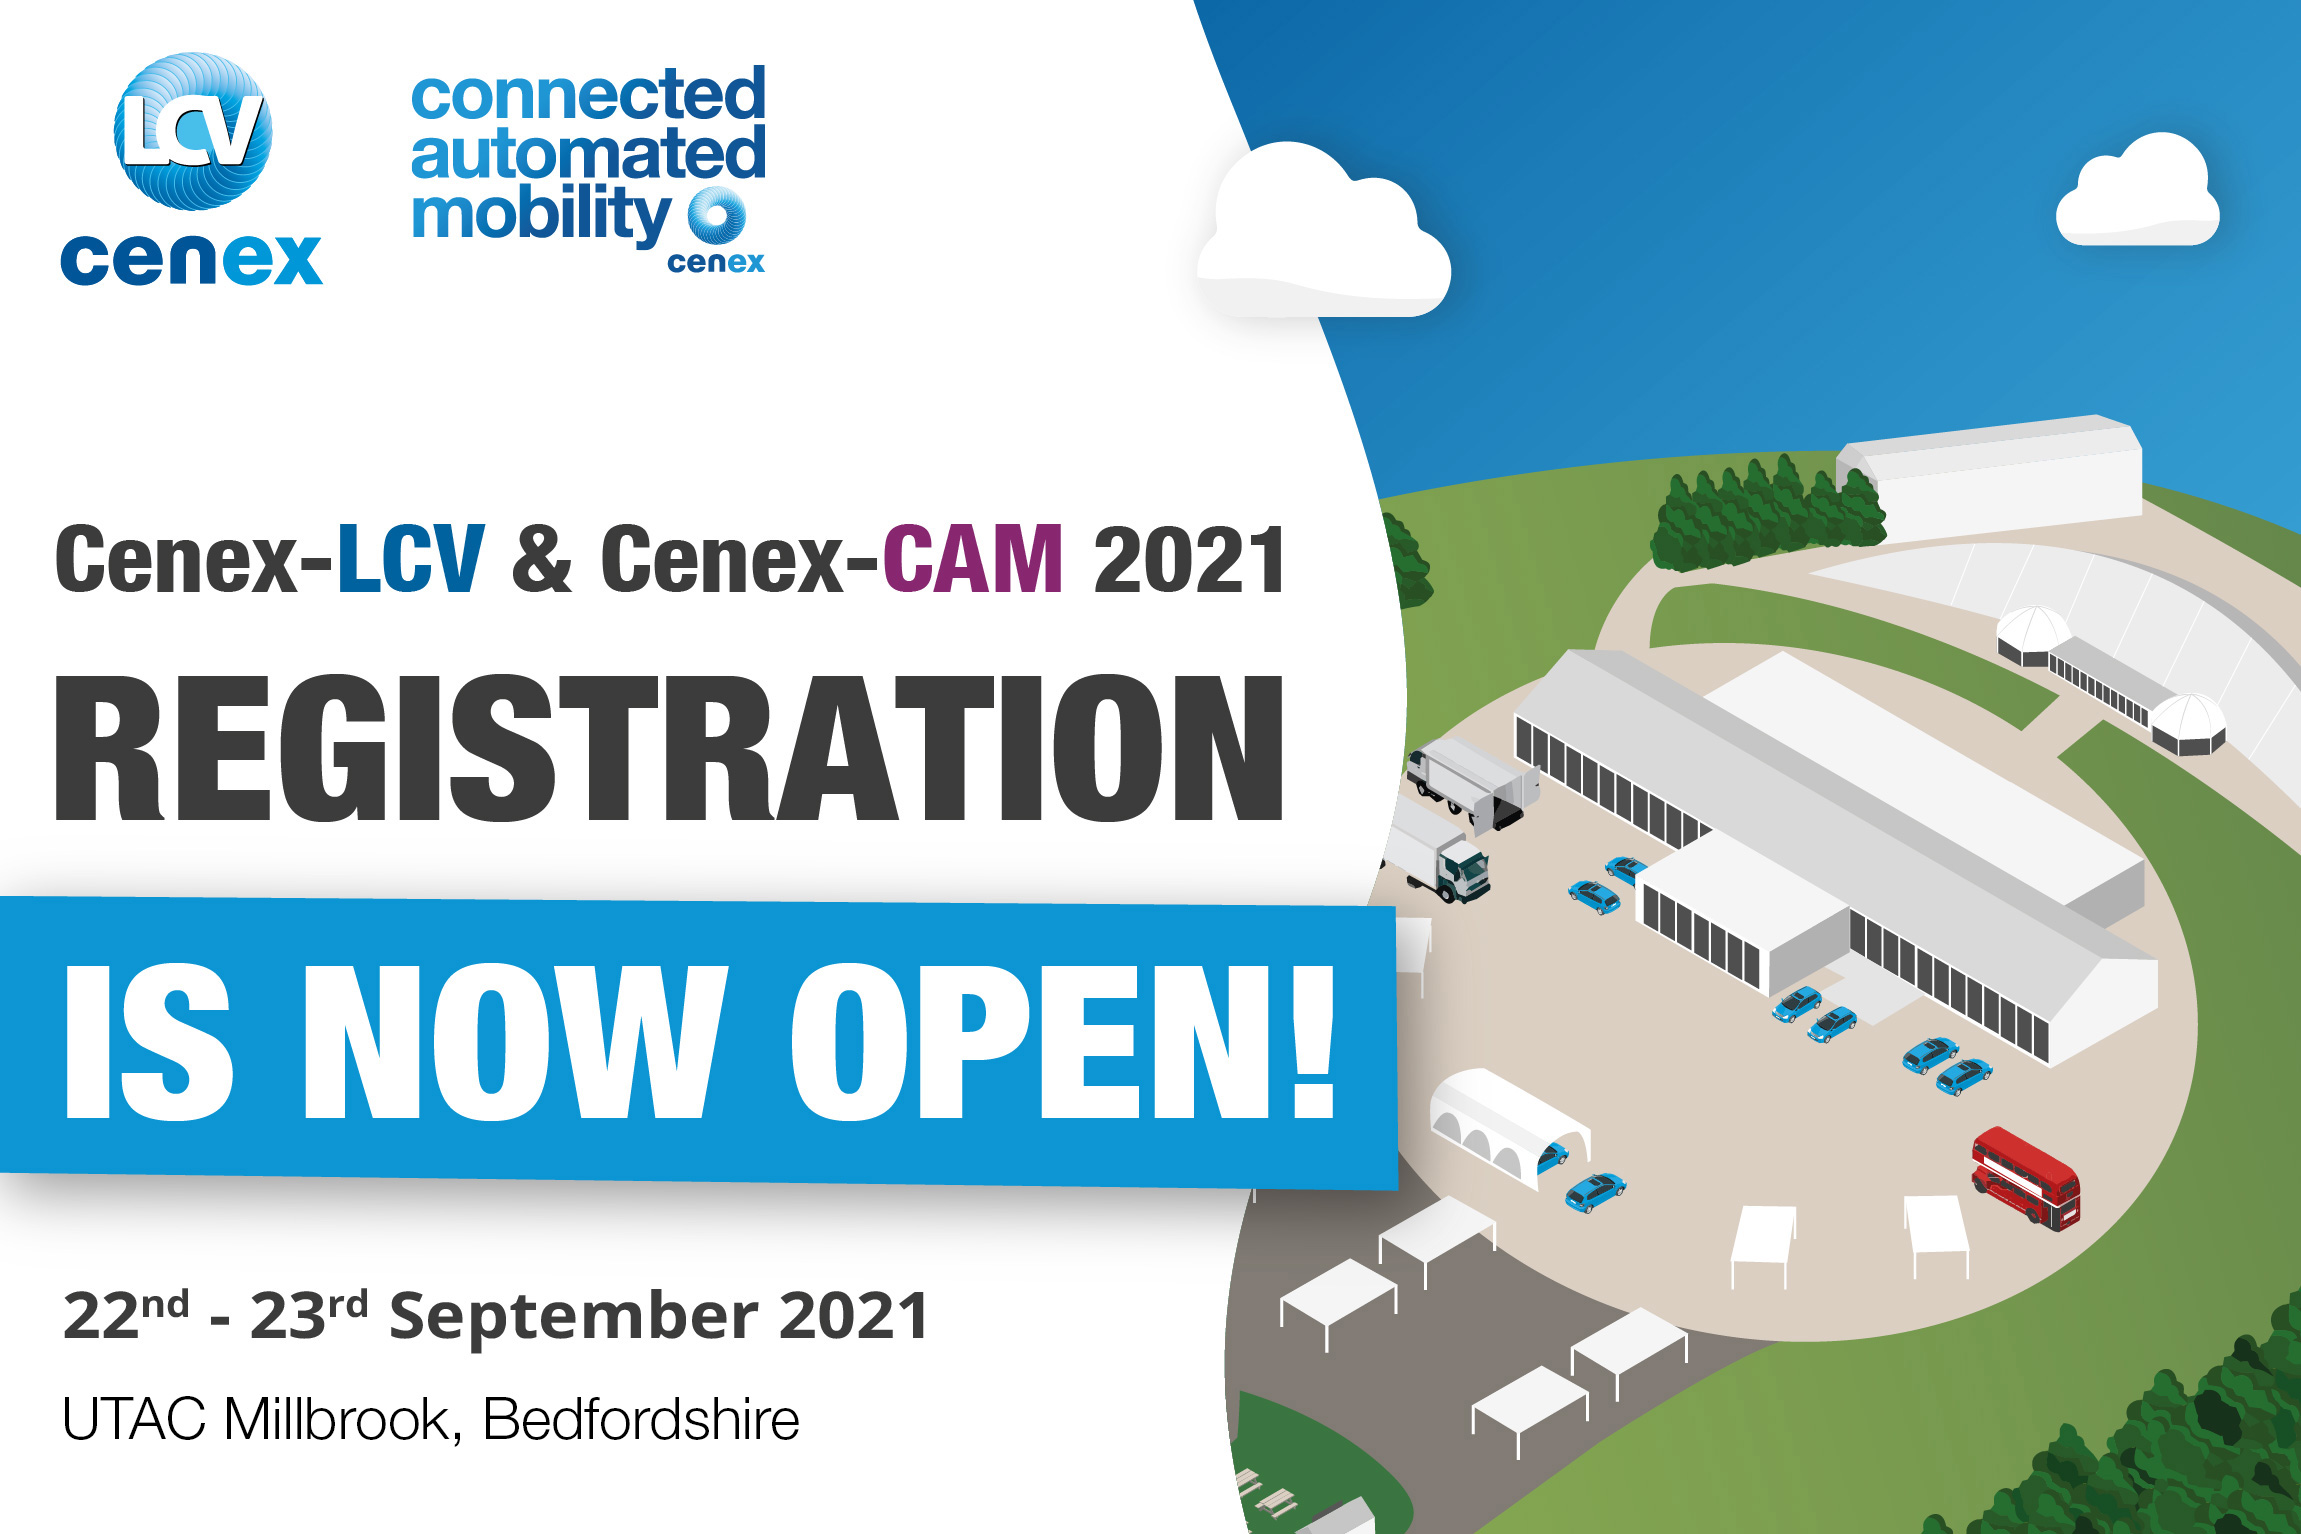 Visitor registration now open for Cenex-LCV2021 and Cenex-CAM2021